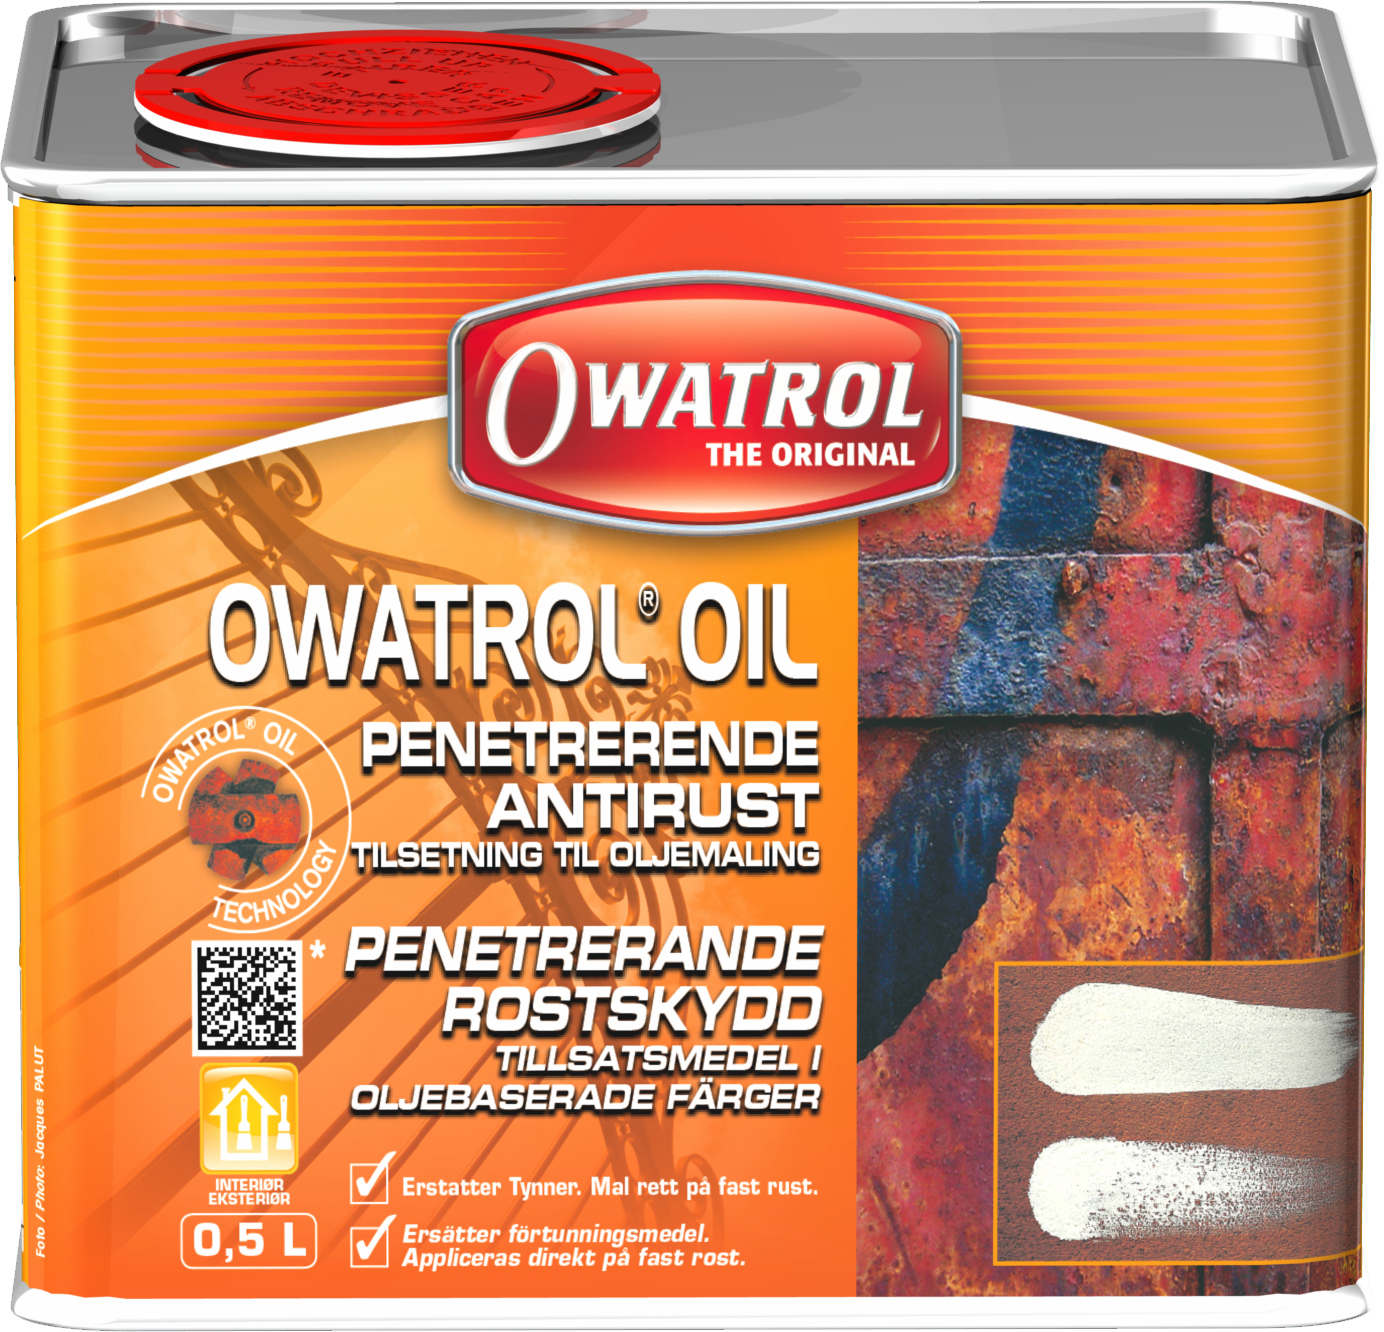 Owatrol penetrerende olje